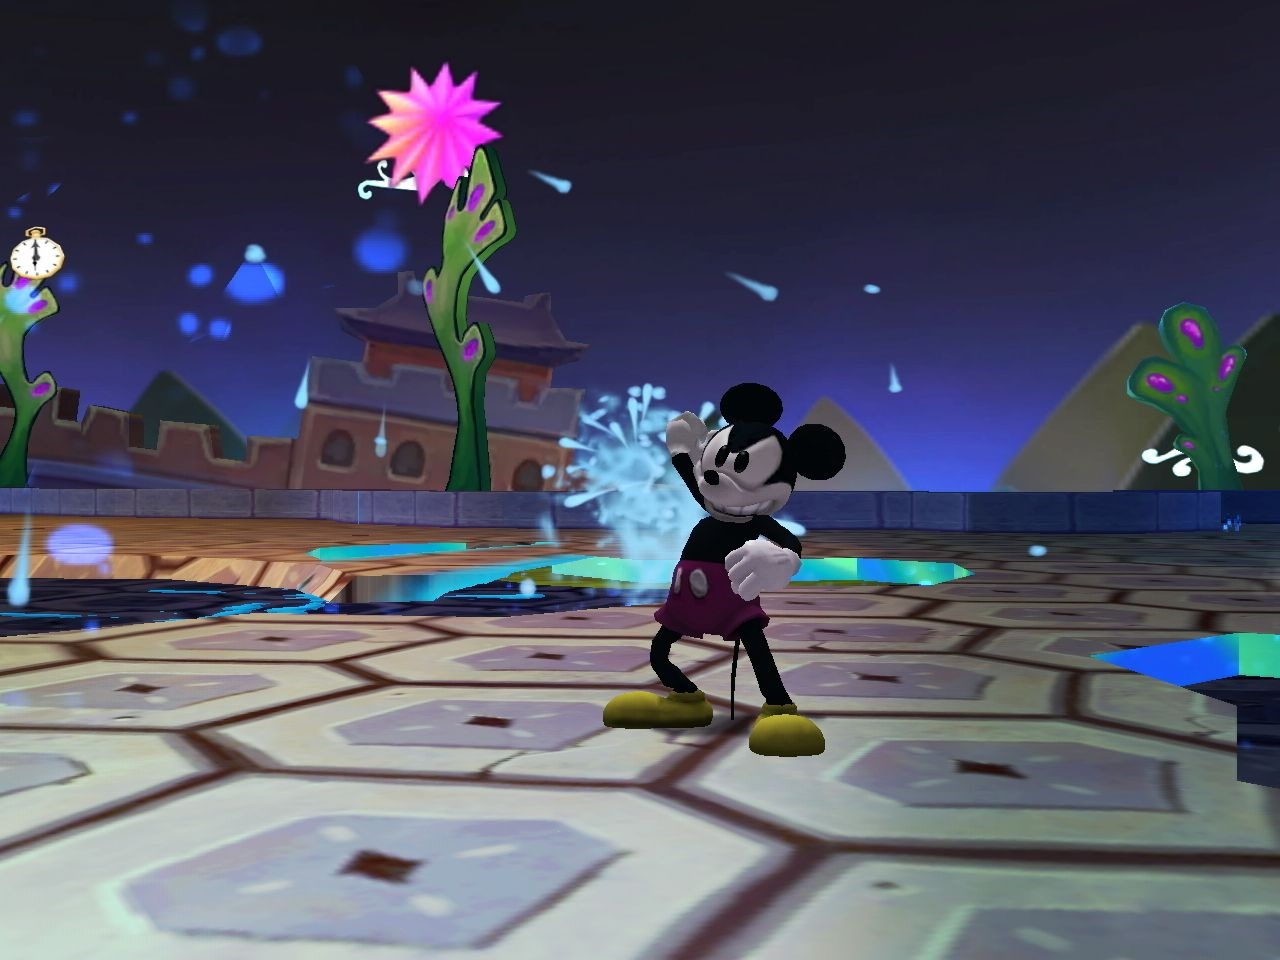 jeuxvideo.com Disney Epic Mickey - Wii Image 14 sur 170